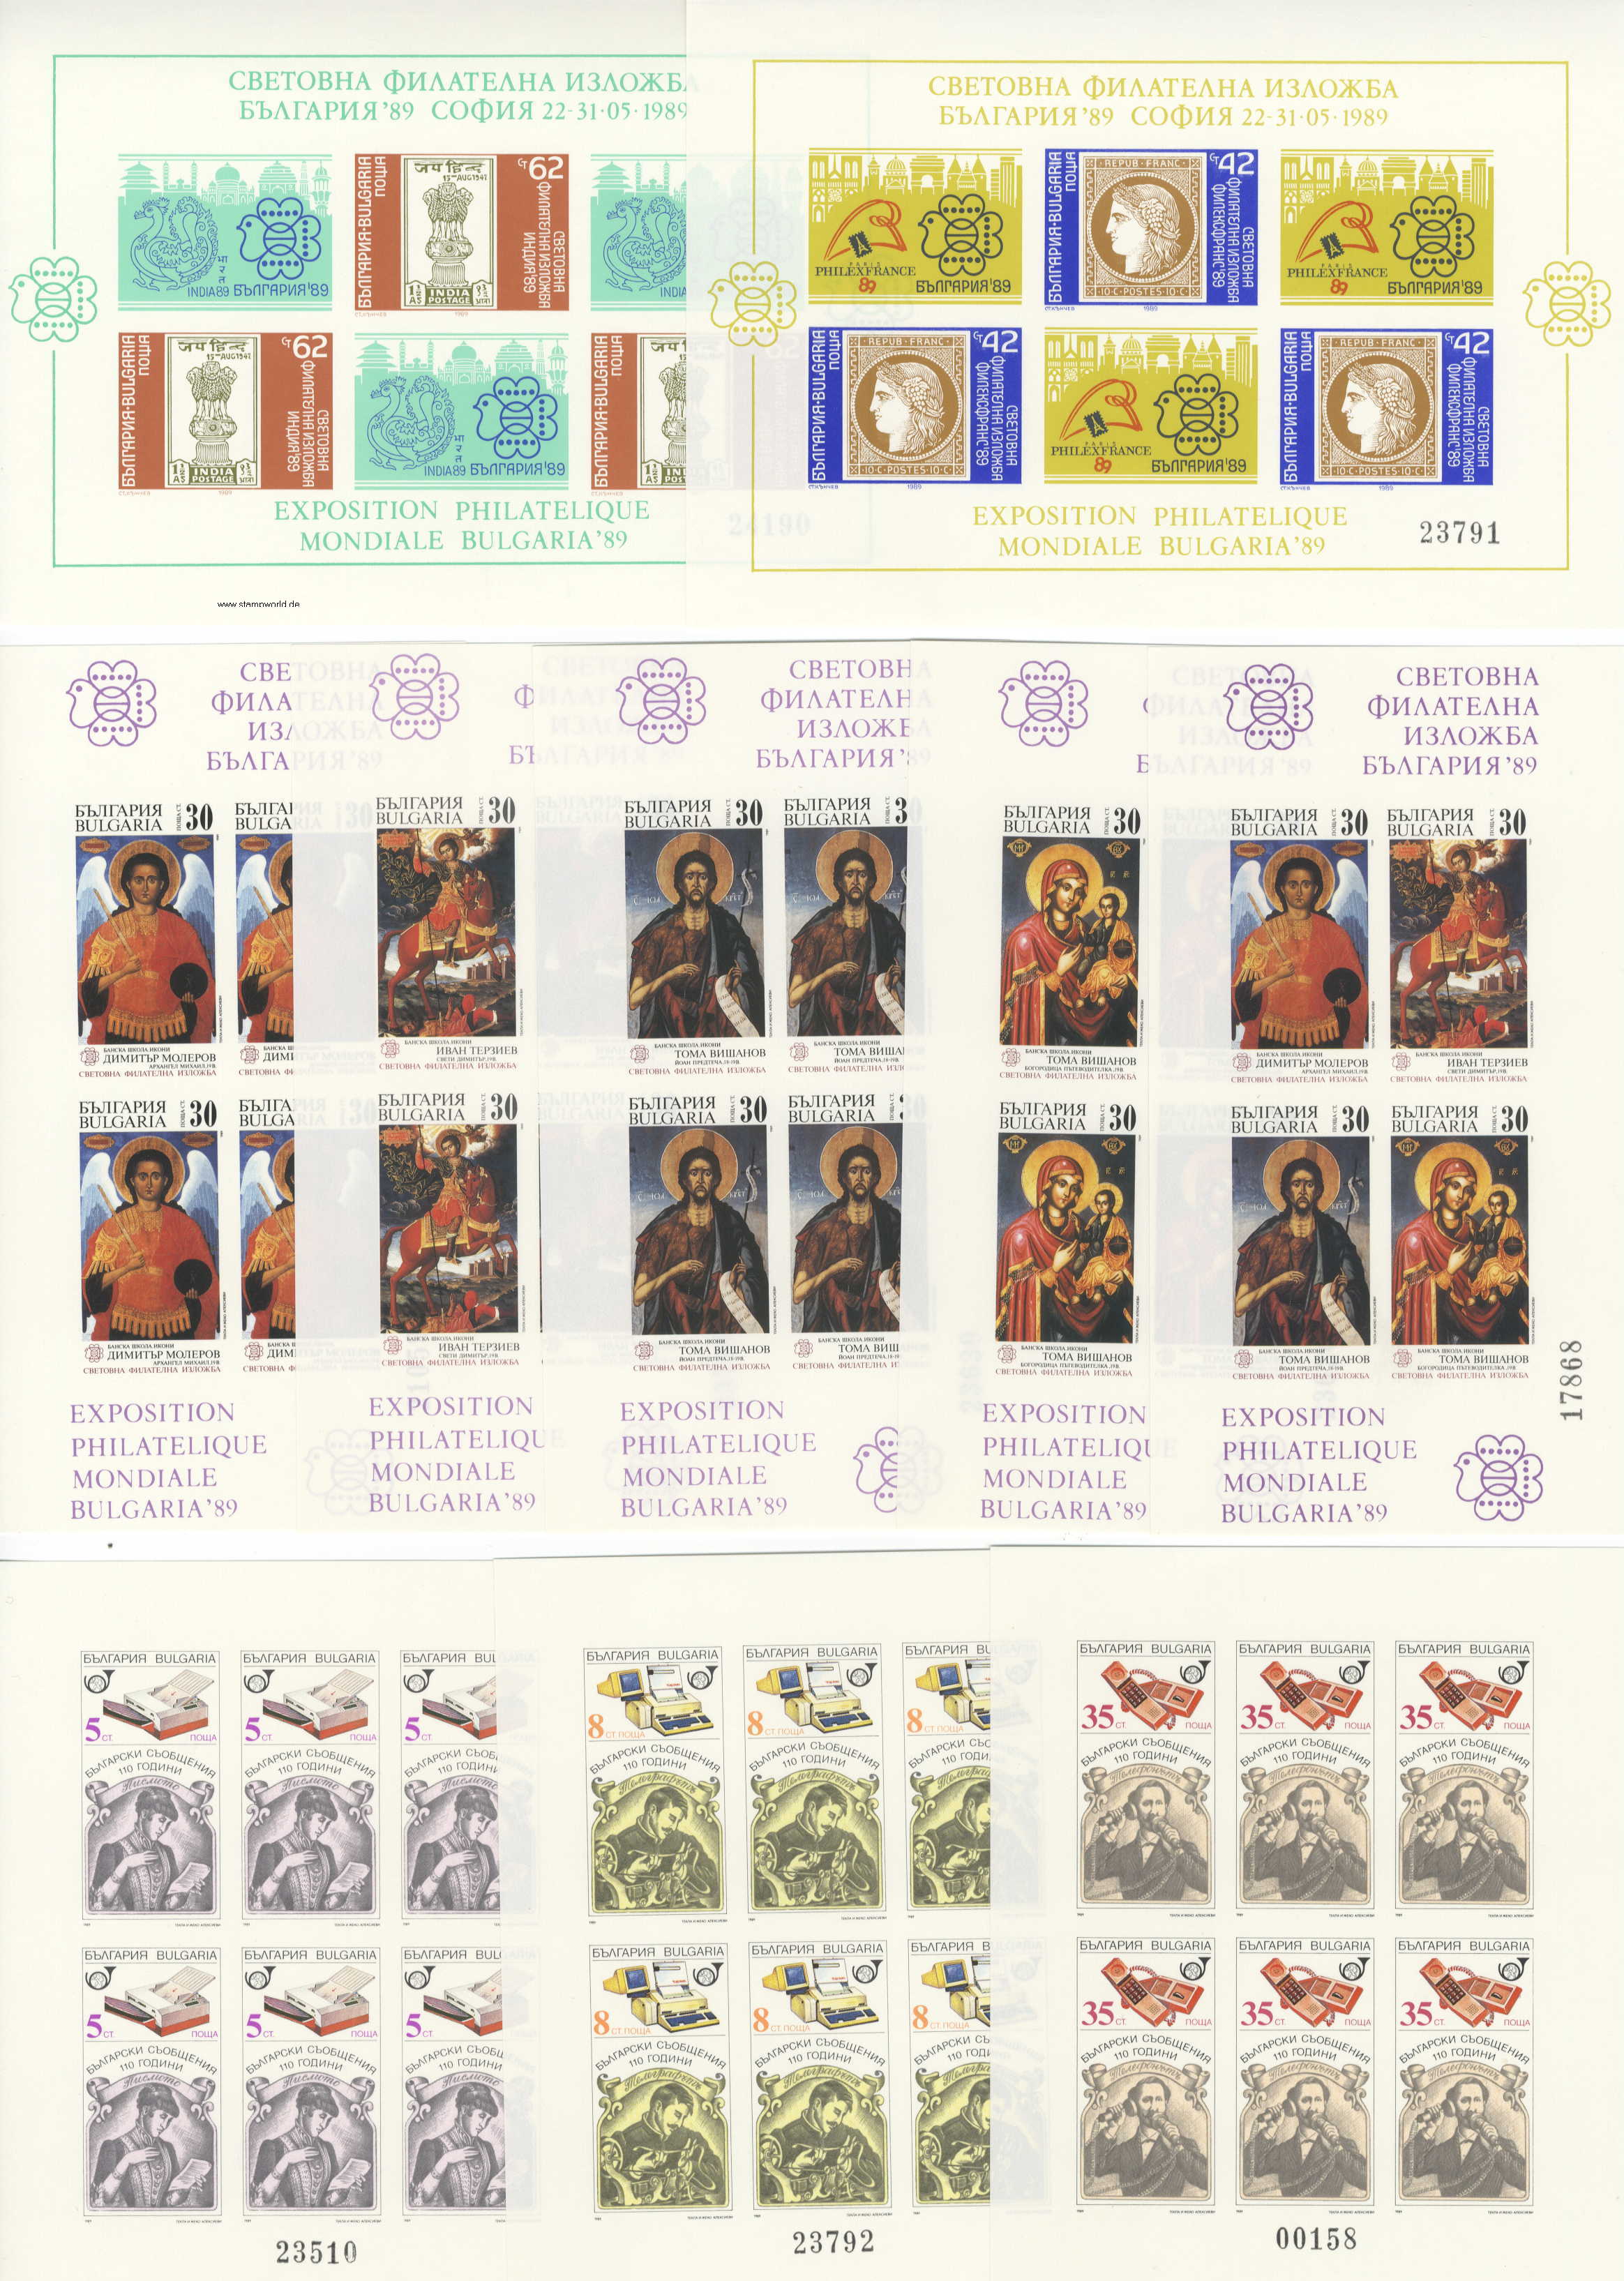 Briefmarken/Stamps BULGARIA 89/Telefon/EDV/Drucker/relig. Gemälde/Madonna/Pferde/Marke a. Marke